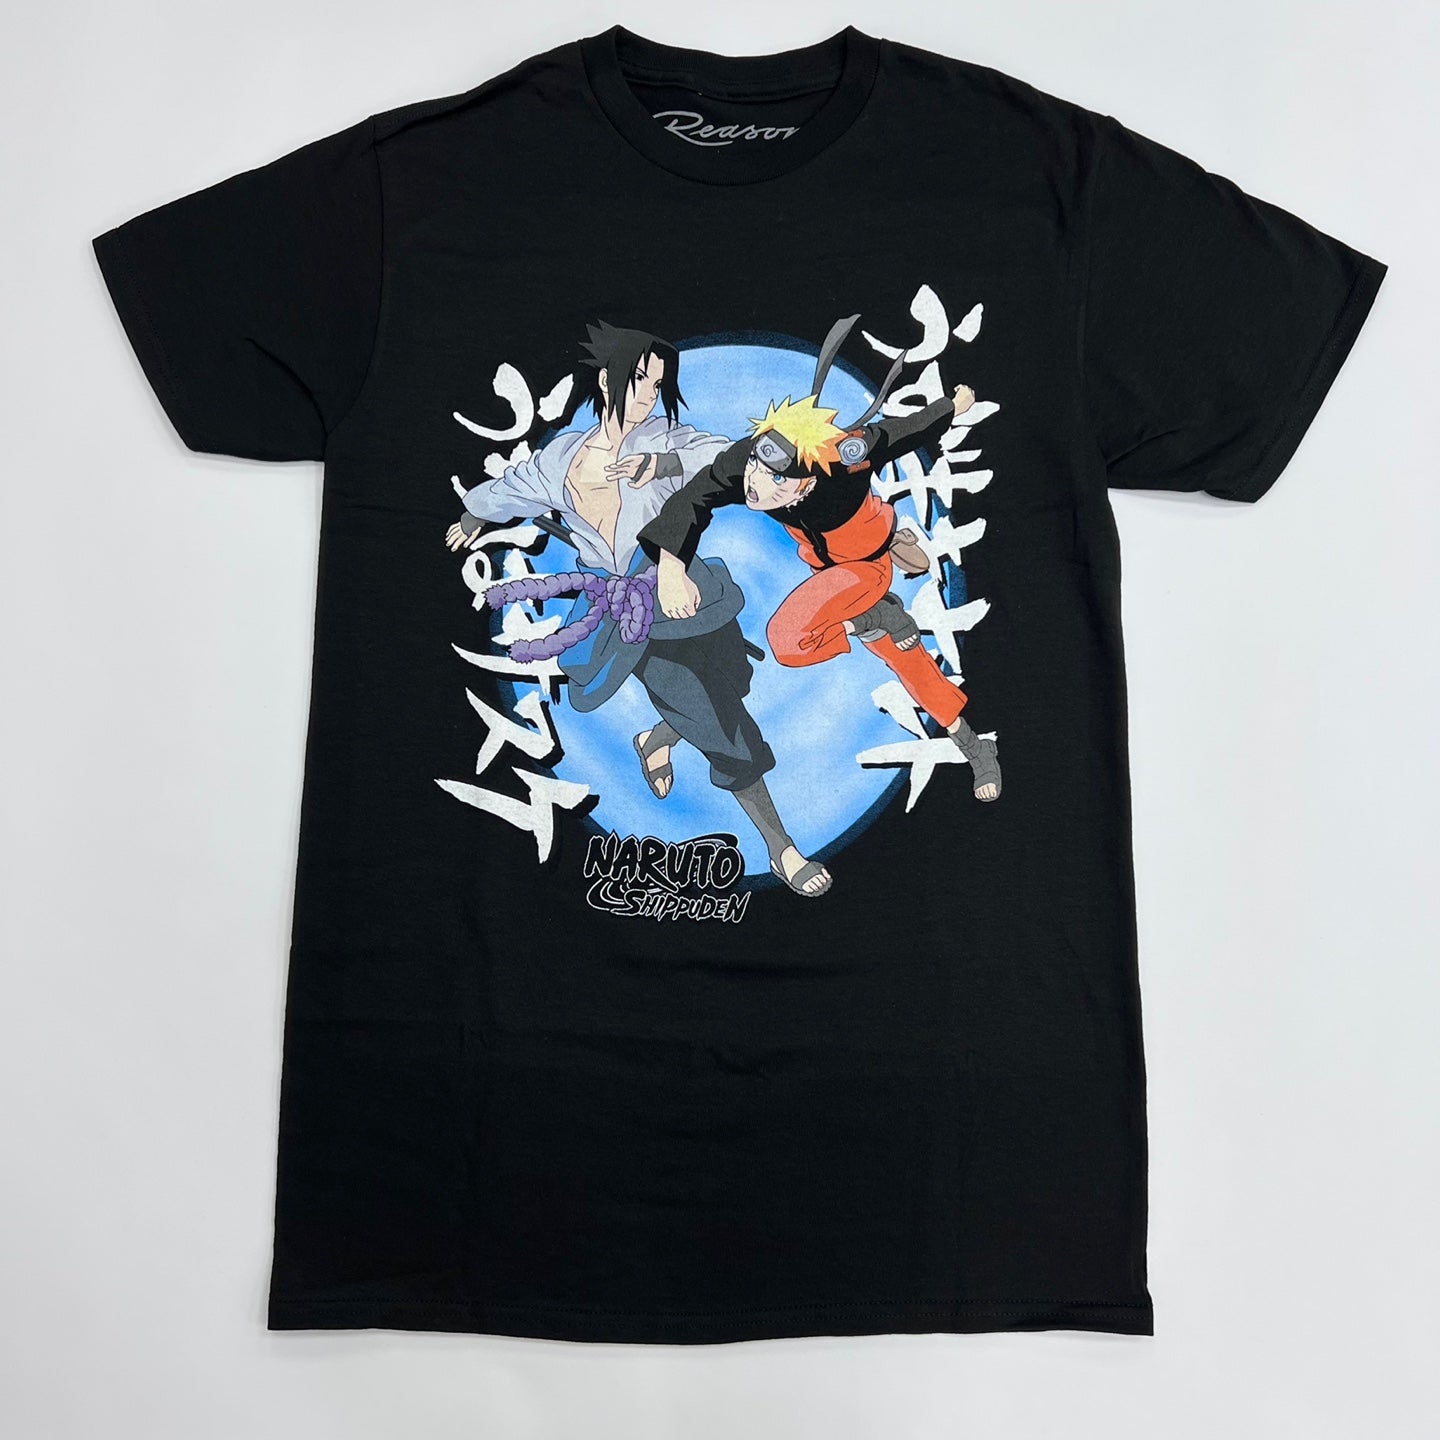 REASONS Naruto Shippuden Graphic T-Shirt